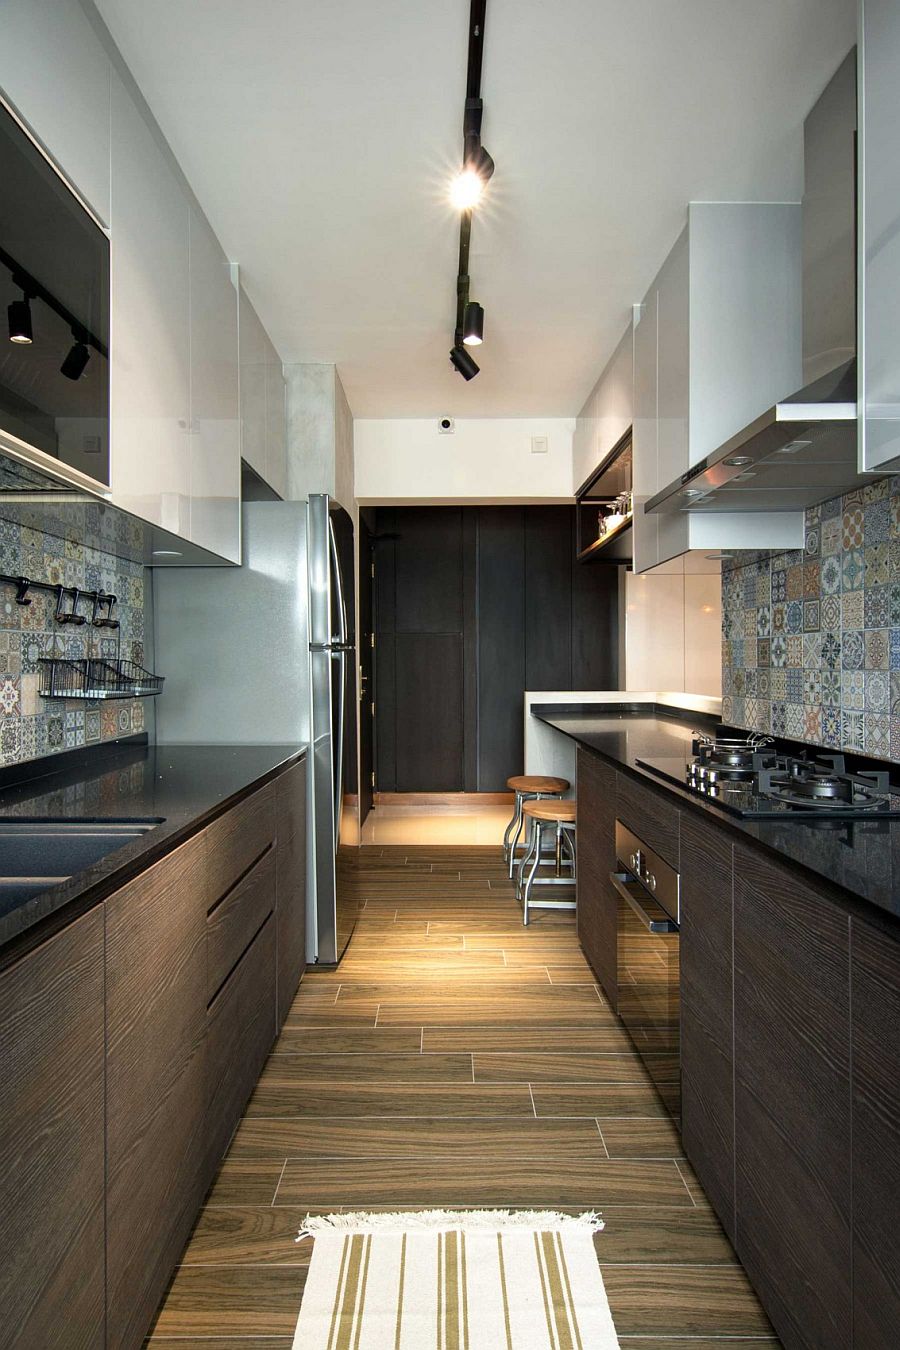 Small contemporary kitchen design inside stylish home in